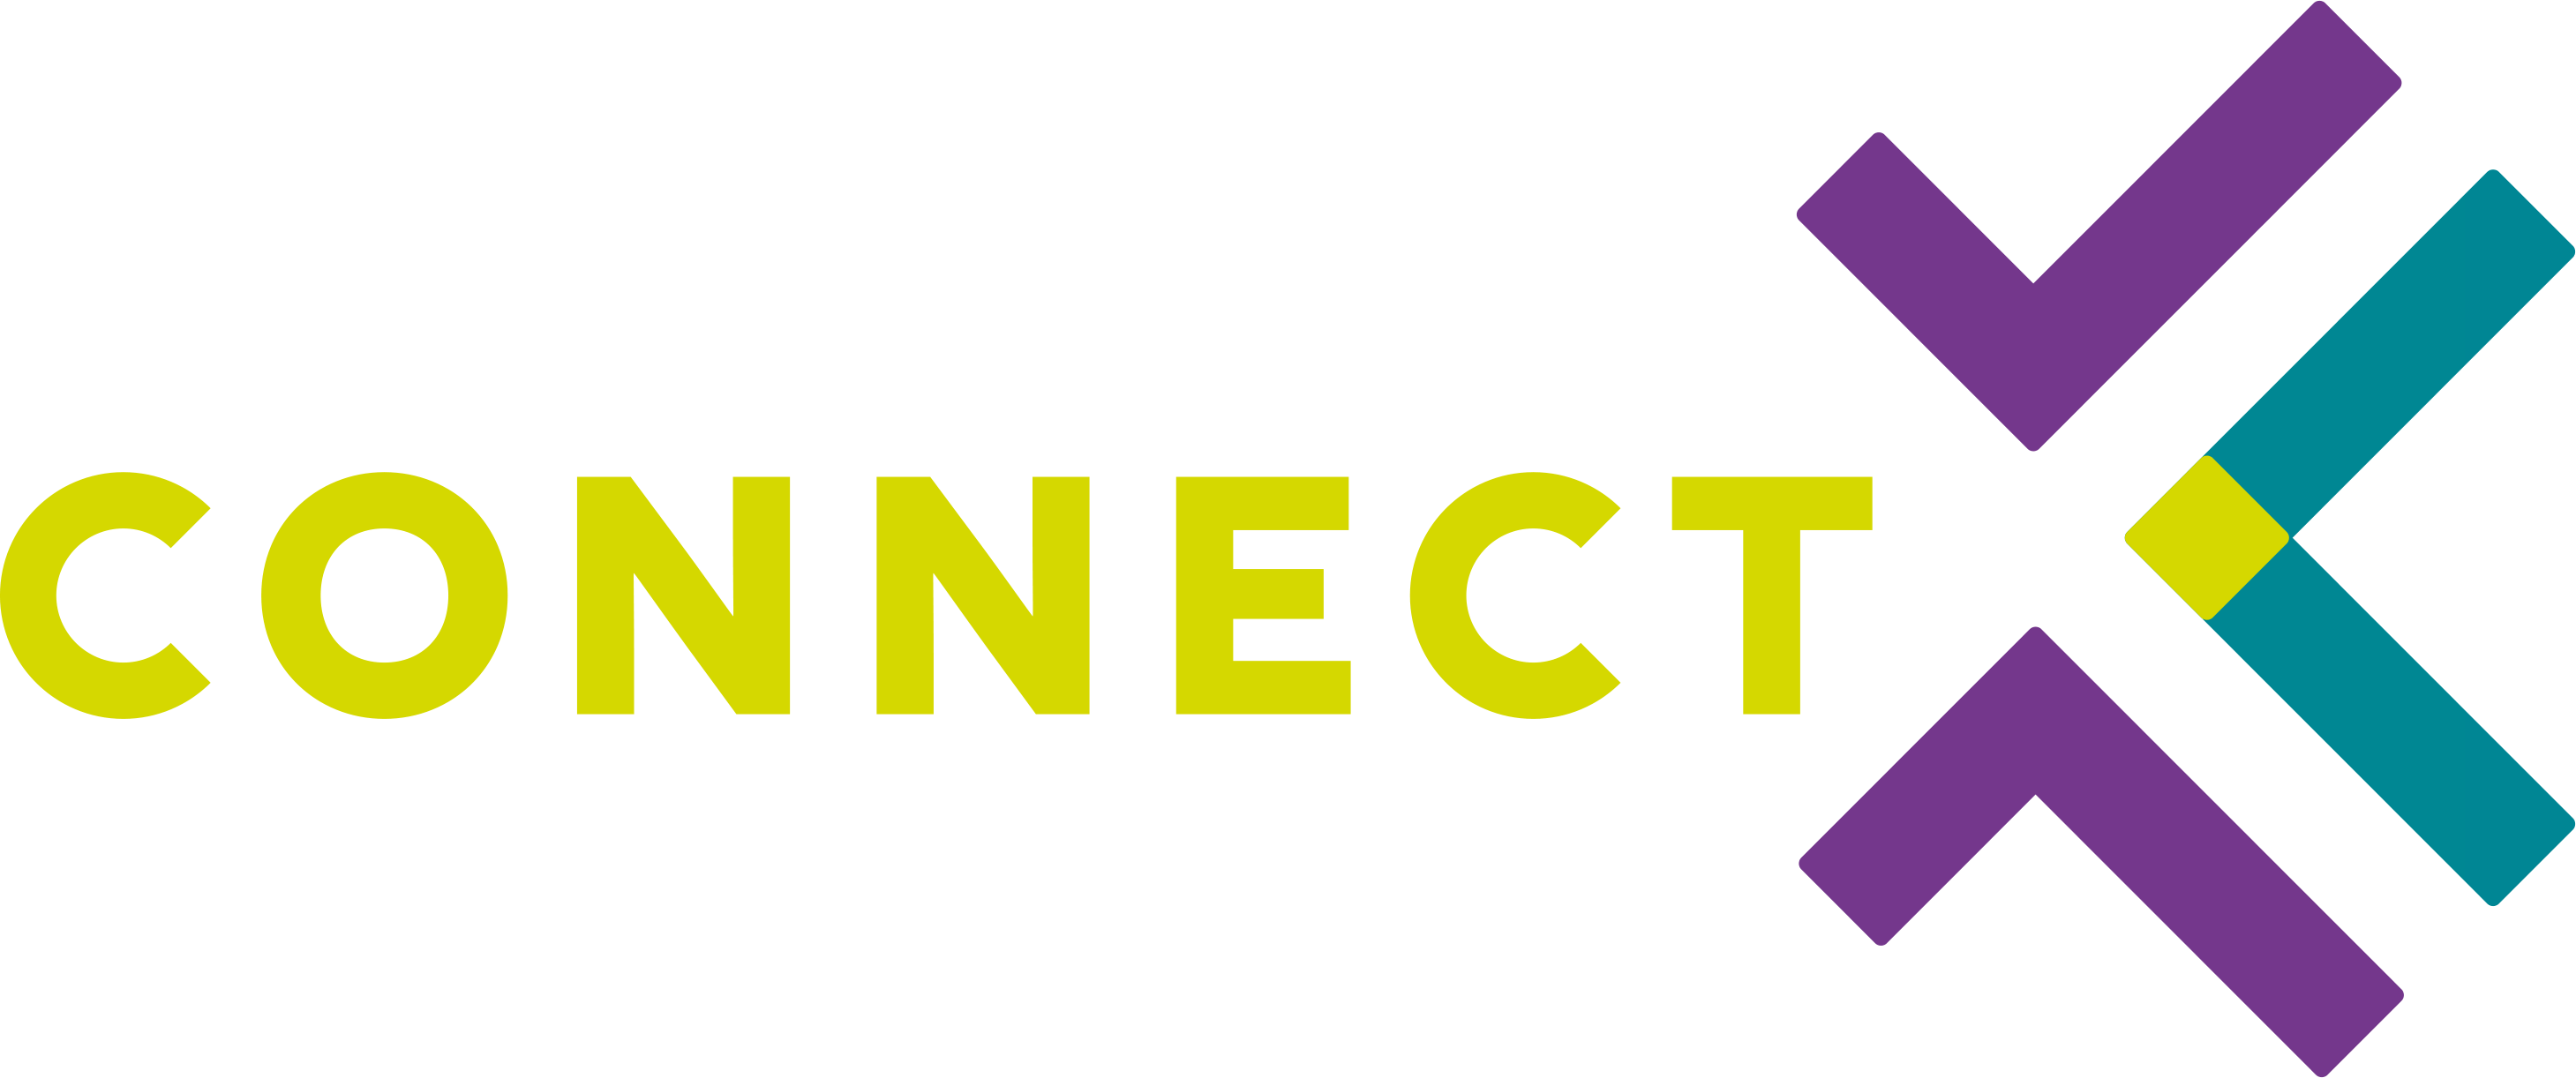 Tagrisso (osimertinib) Connect